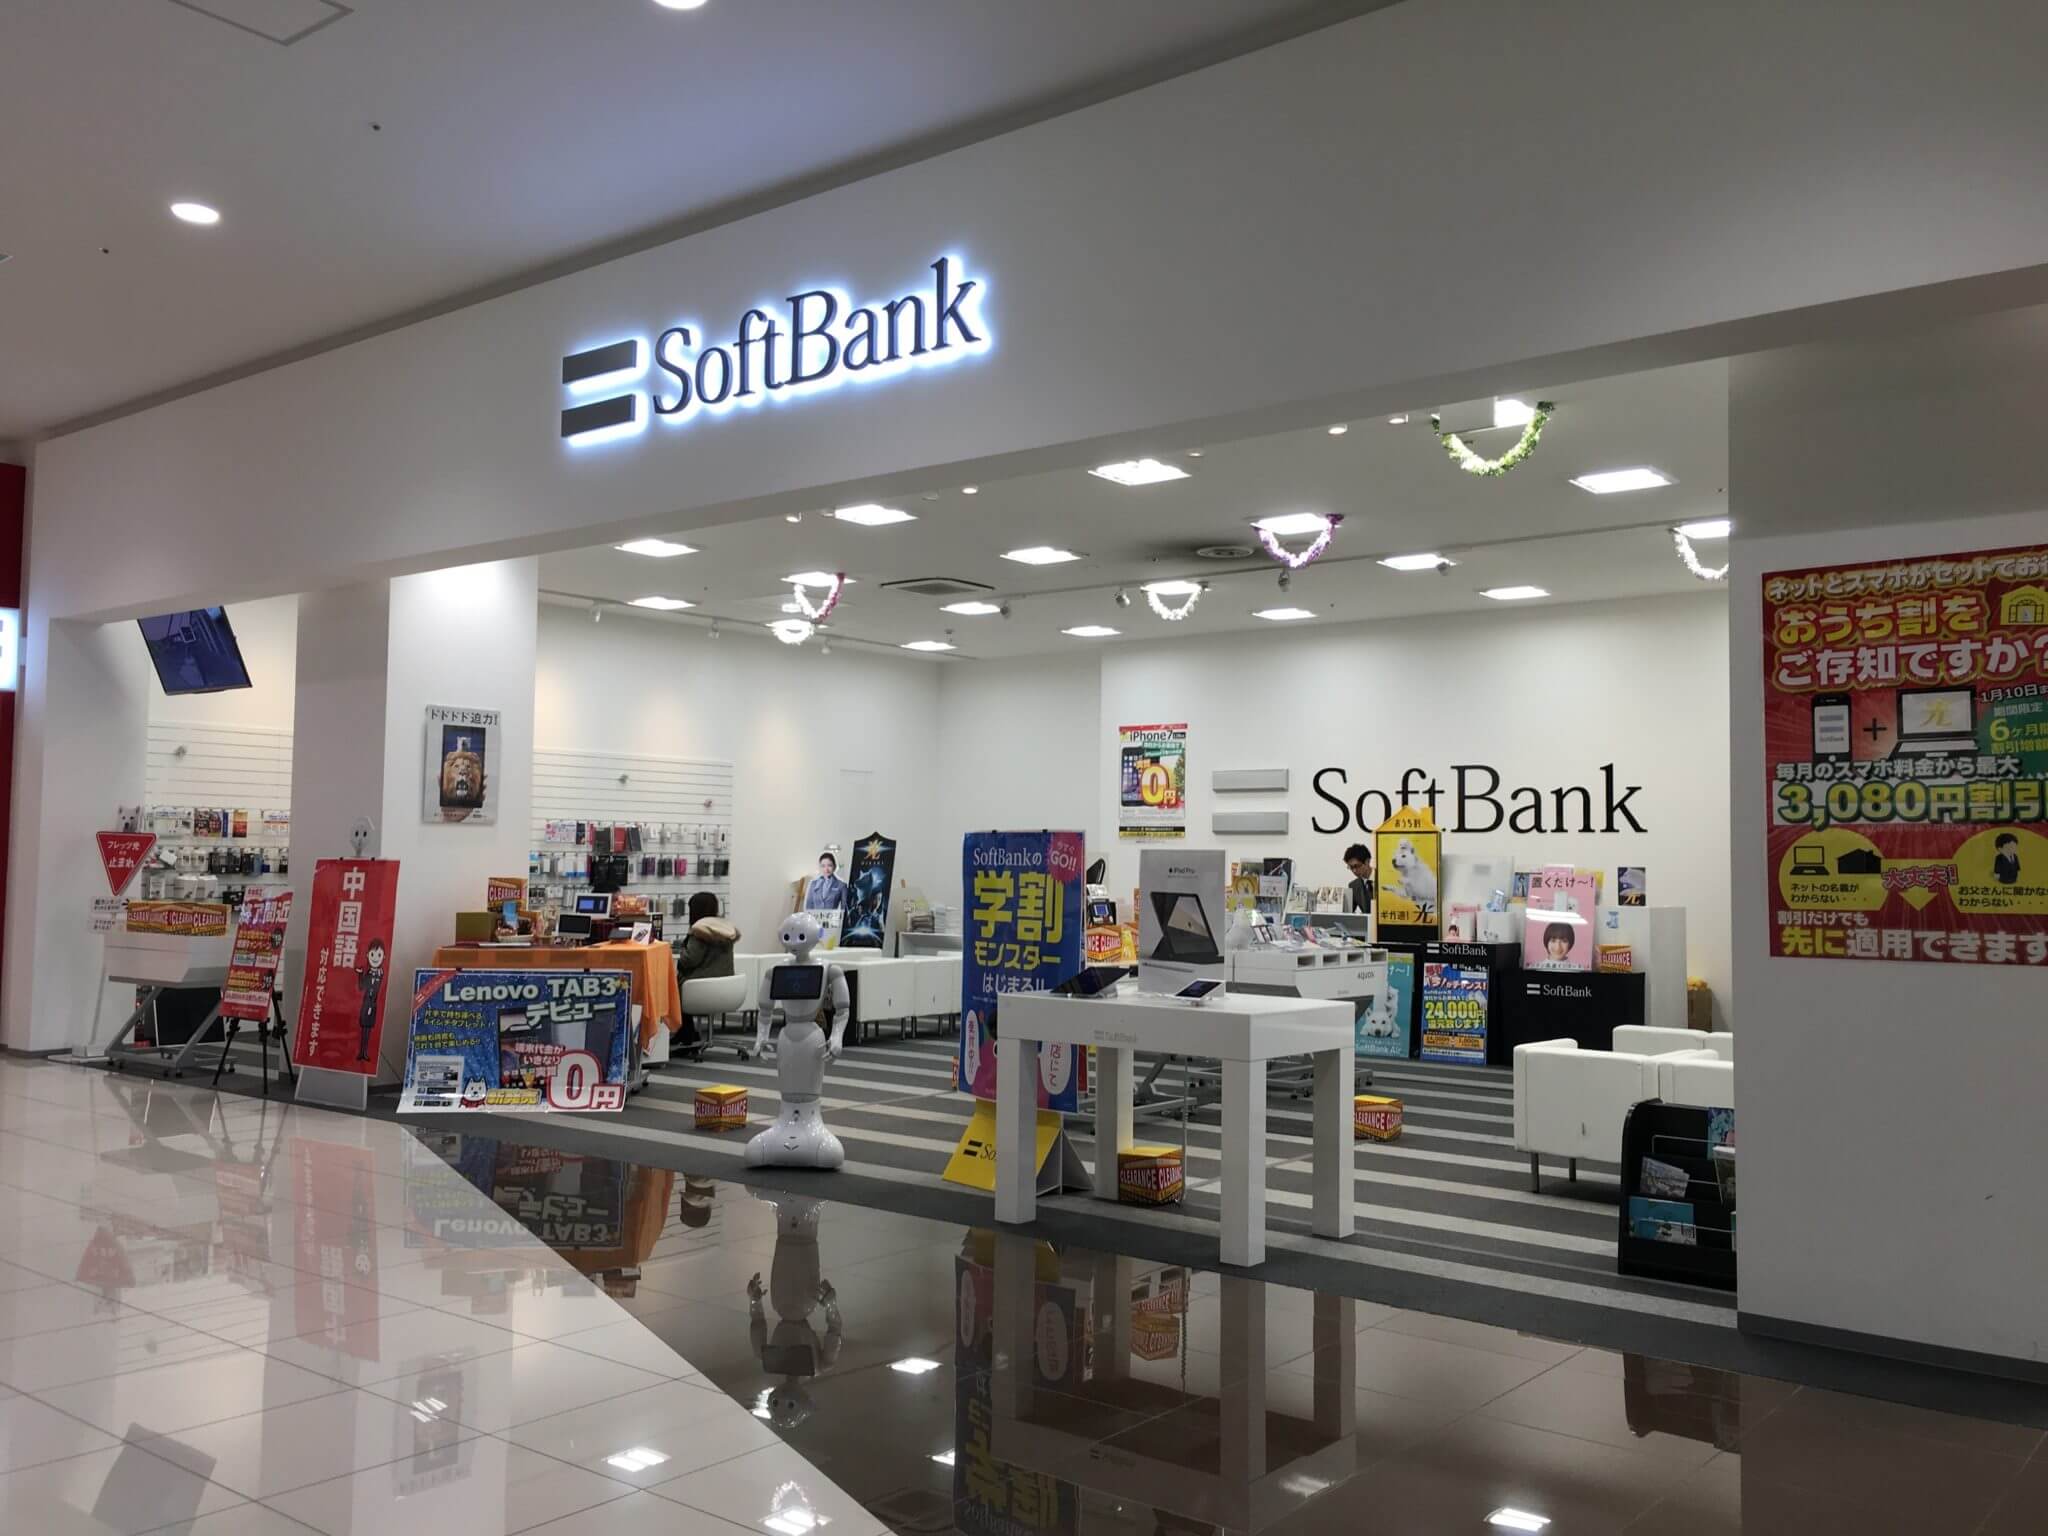 Softbank イオンモール名古屋茶屋 アスカ株式会社 携帯販売代理店 東京を拠点に全国でソフトバンク Yモバイルを運営